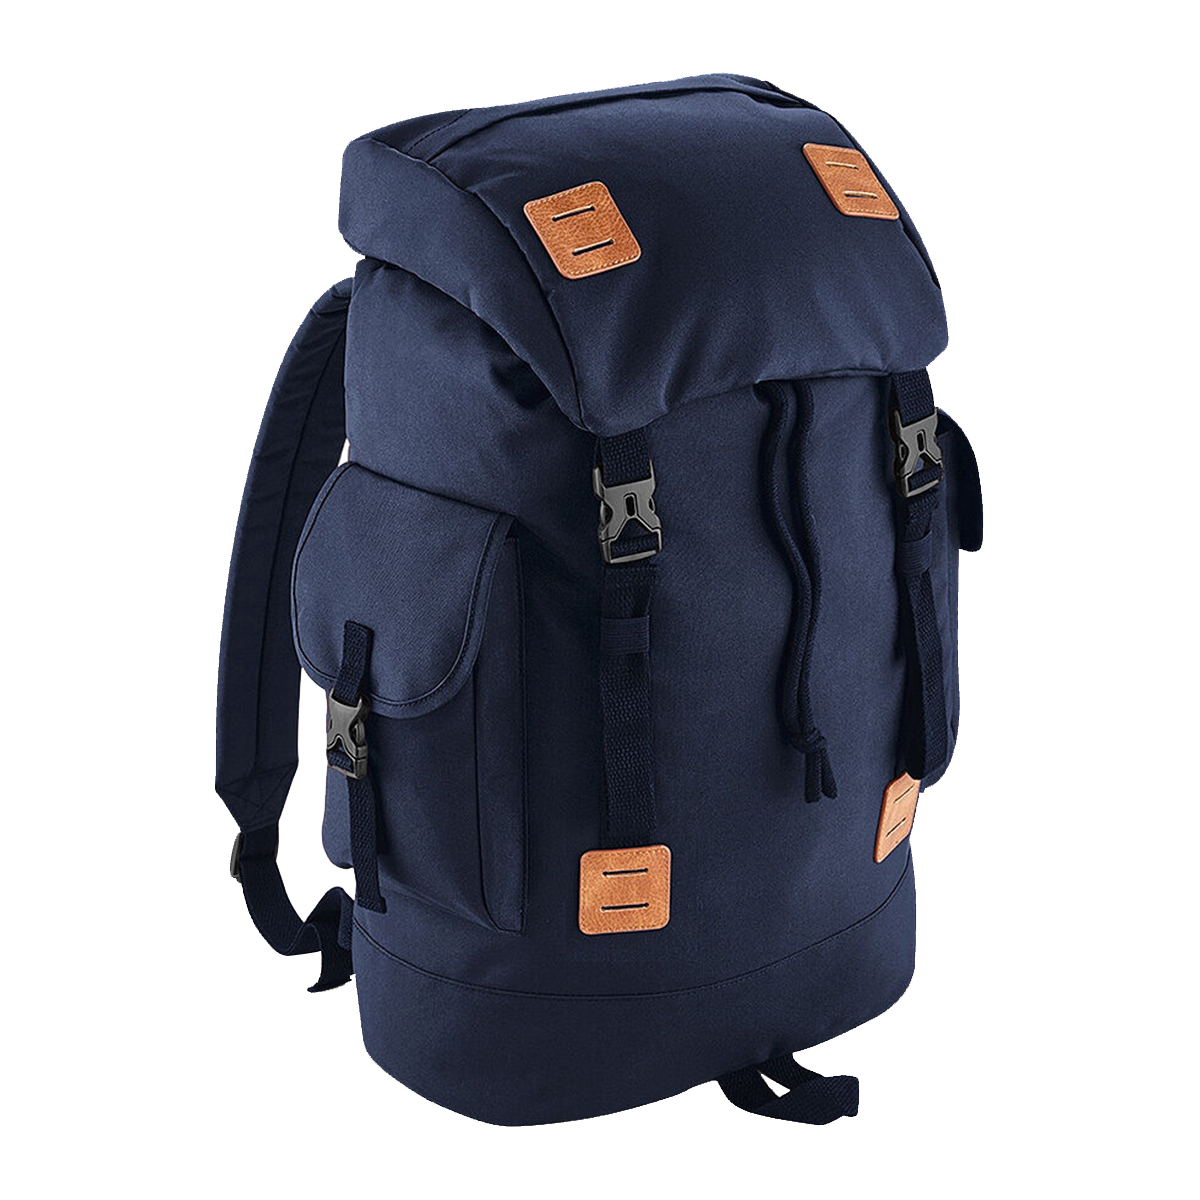 Urban Explorer Backpack/rochila (pacote De 2) Bagbase - azul - 